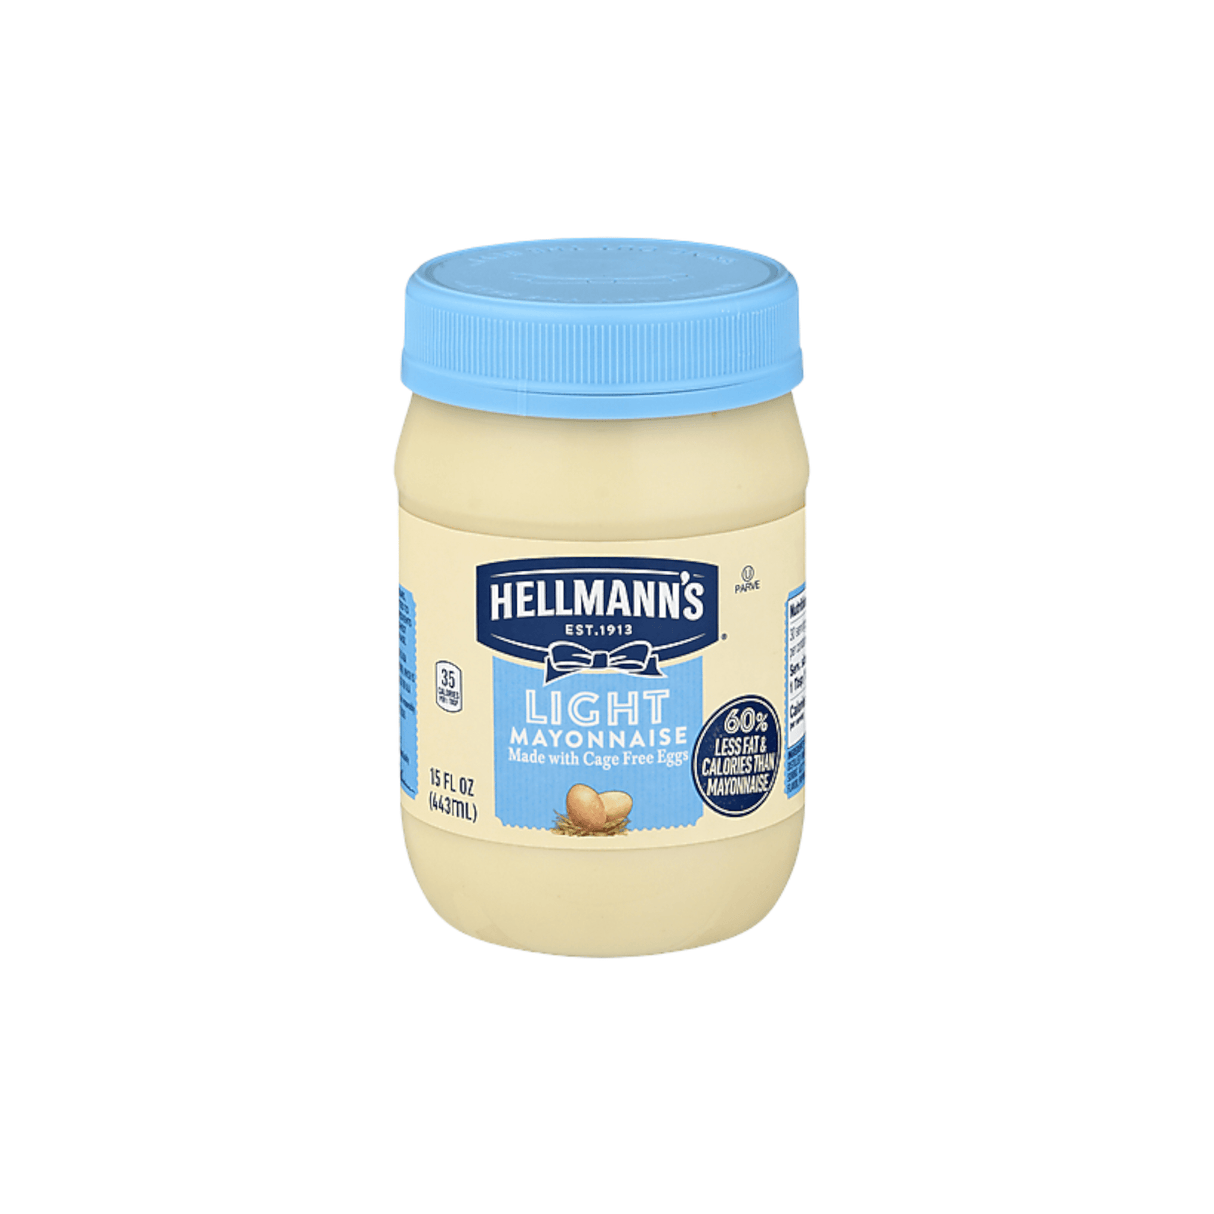 Hellmann's Light Mayonnaise 60% Less Fat